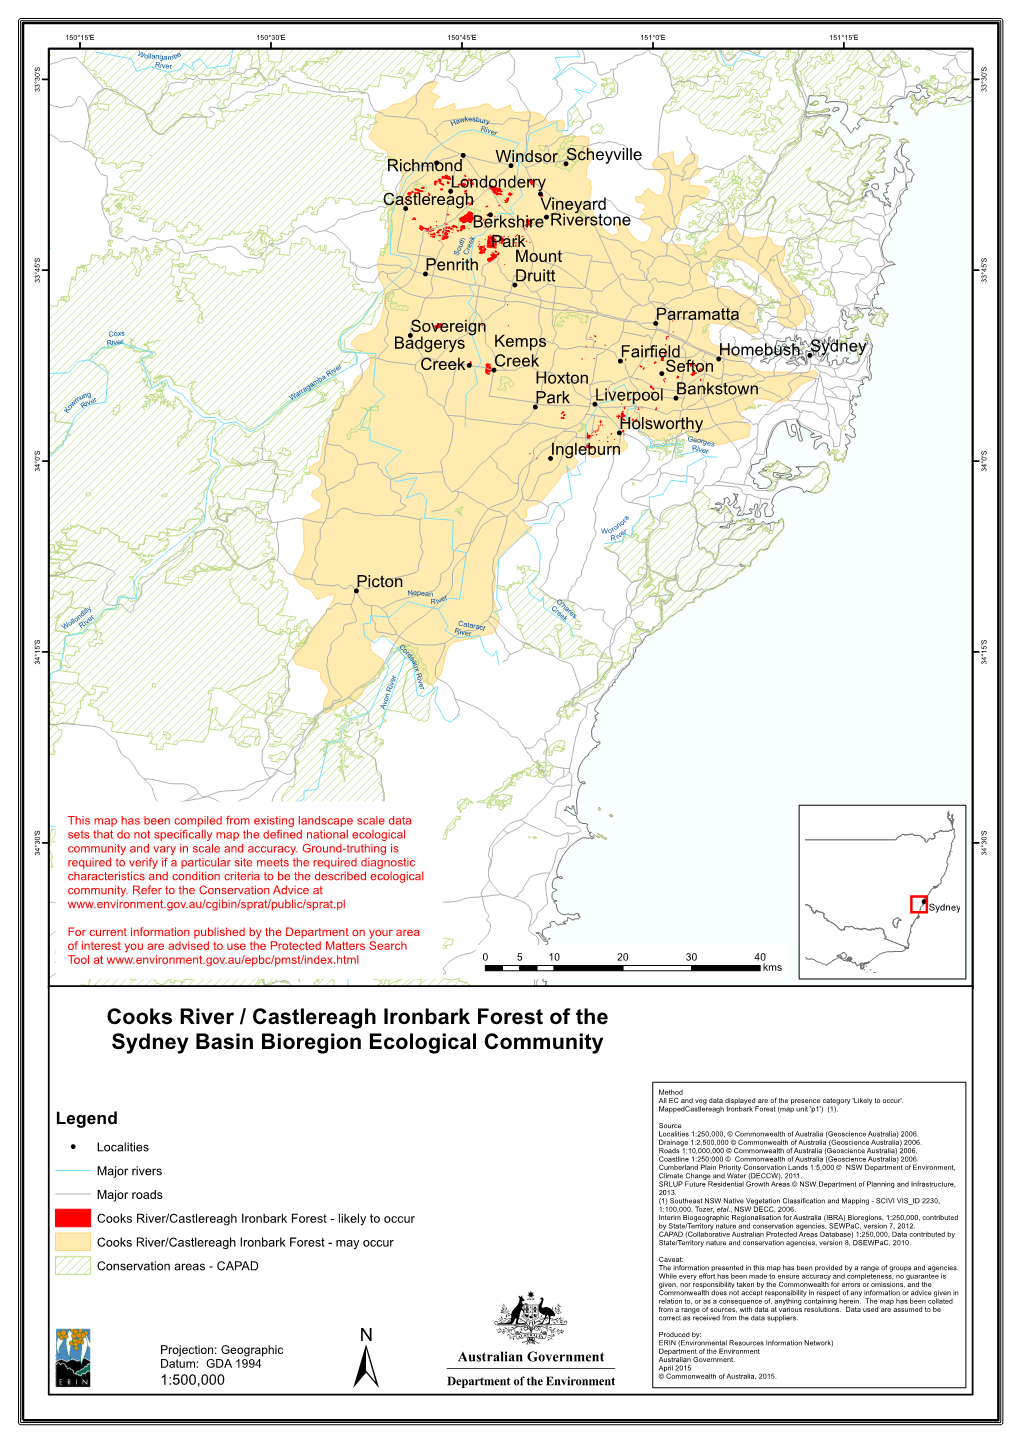 Map of Cooks River/Castlereagh Ironbark Forest of the Sydney Basin Bioregion Ecological Community